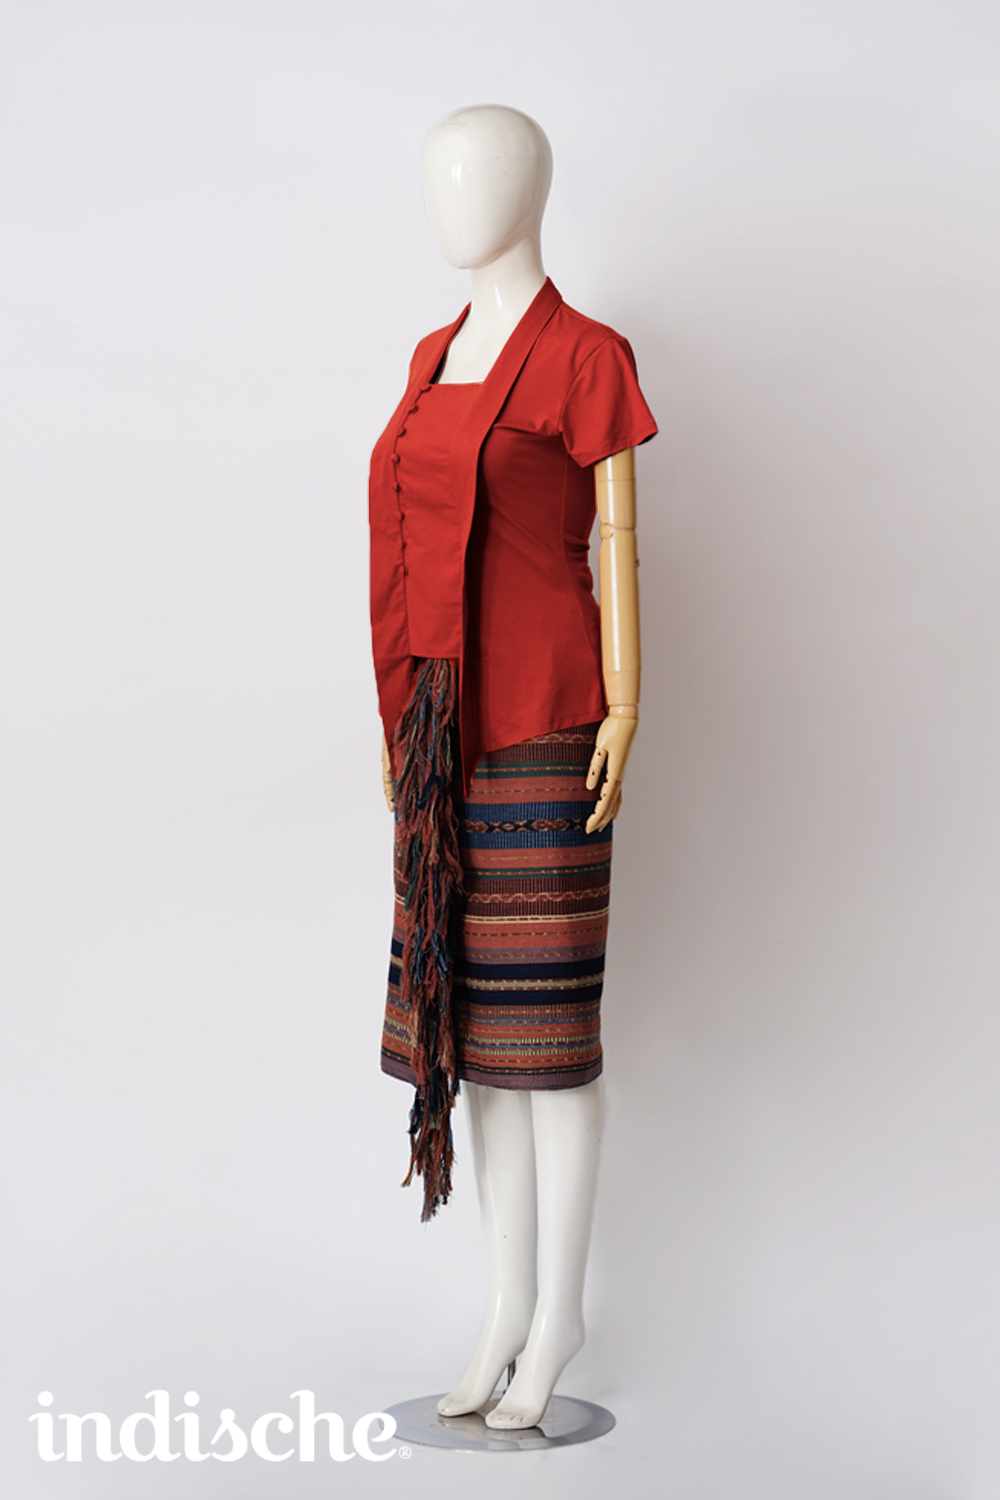 Knit Kutubaru Kebaya in Brick Red